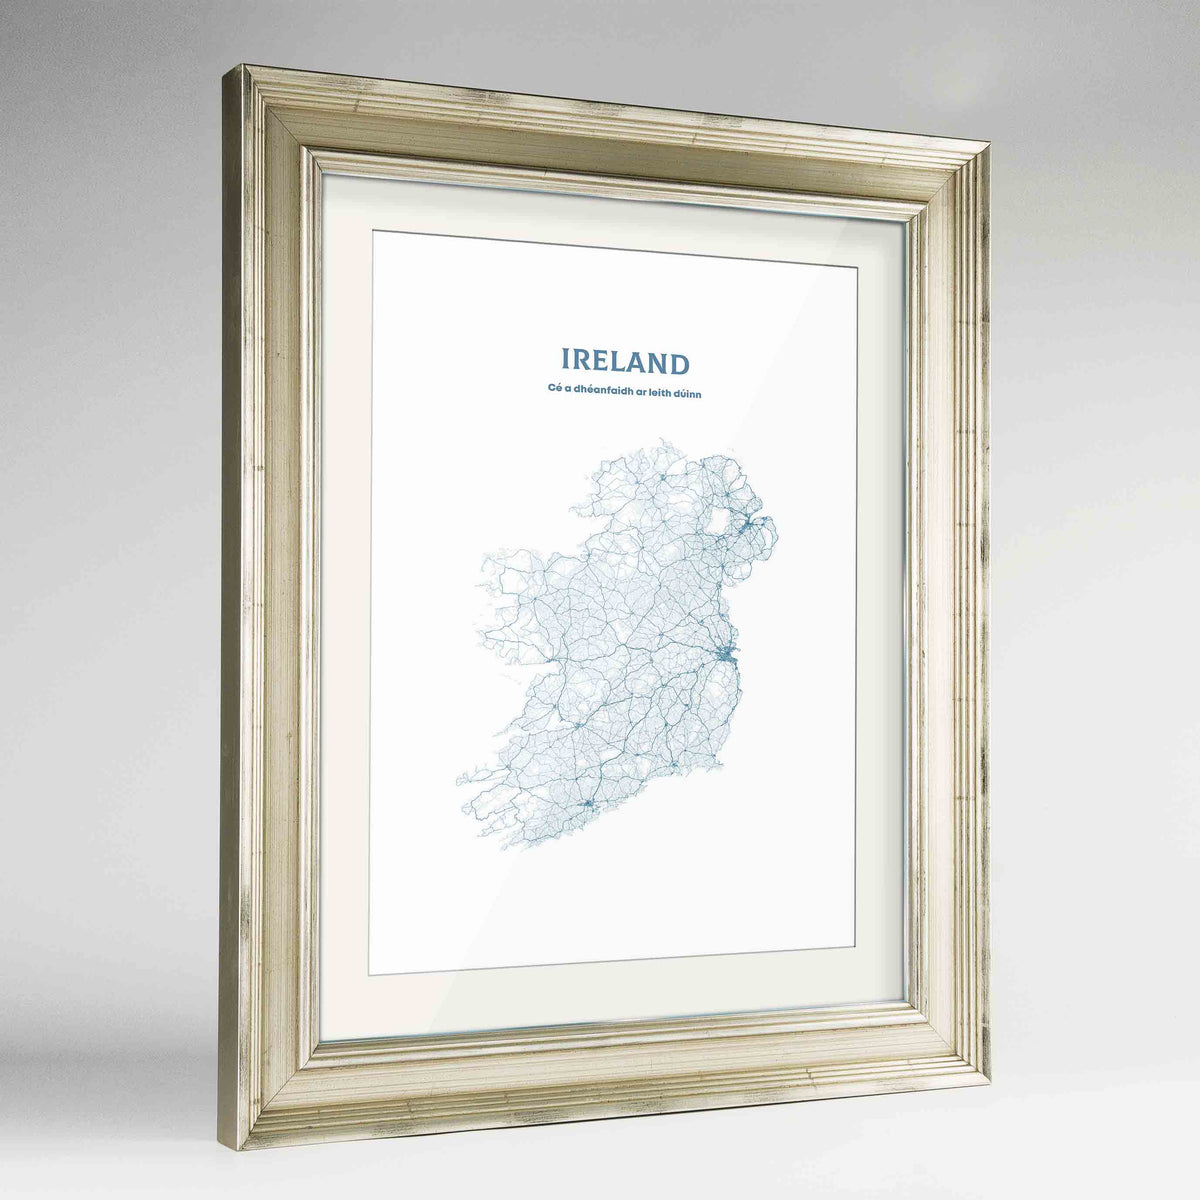 Ireland - All Roads Art Print - Framed